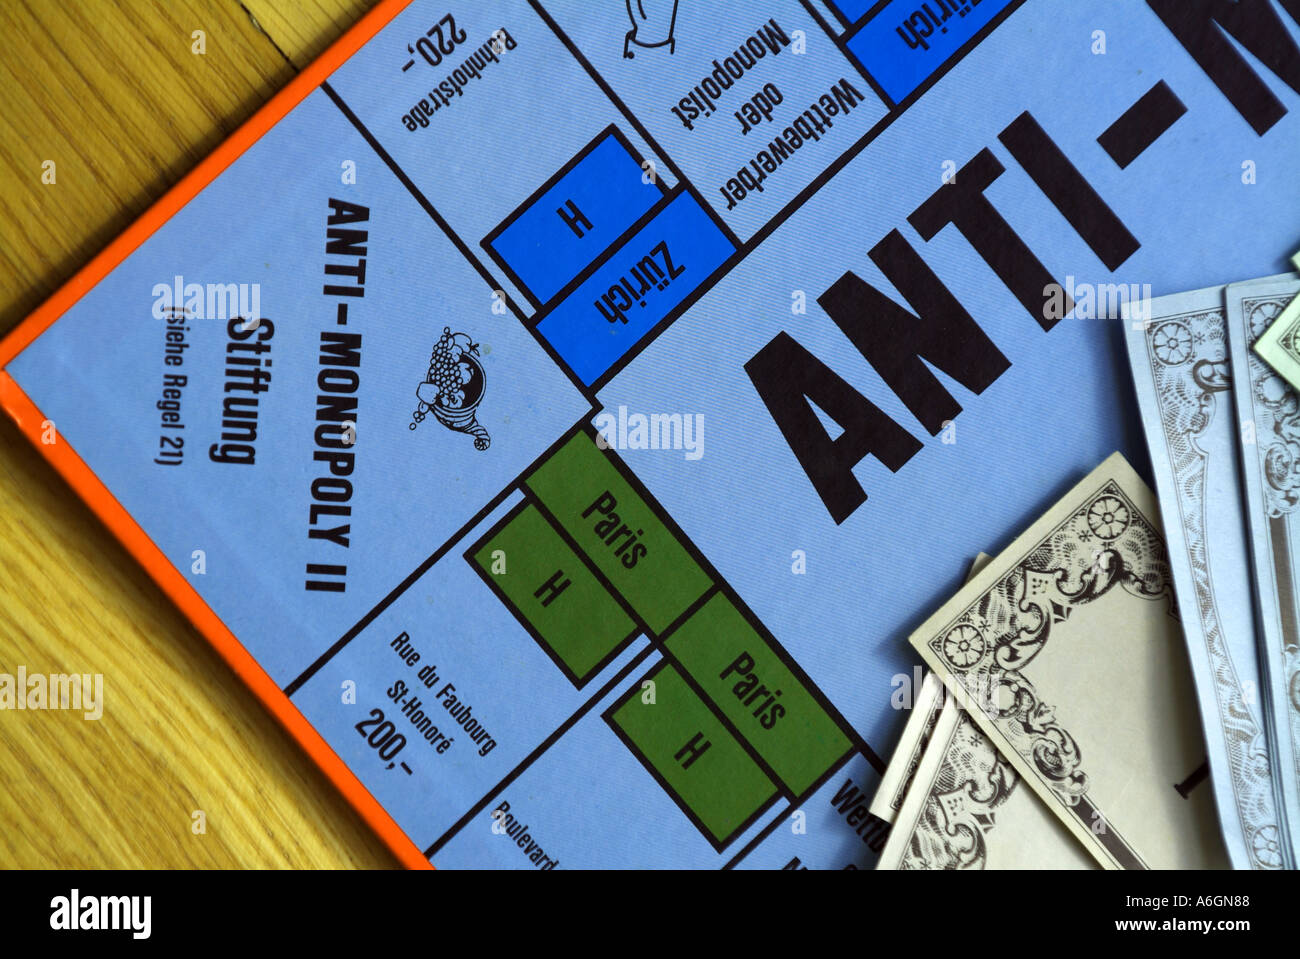 anti monopoly board game review